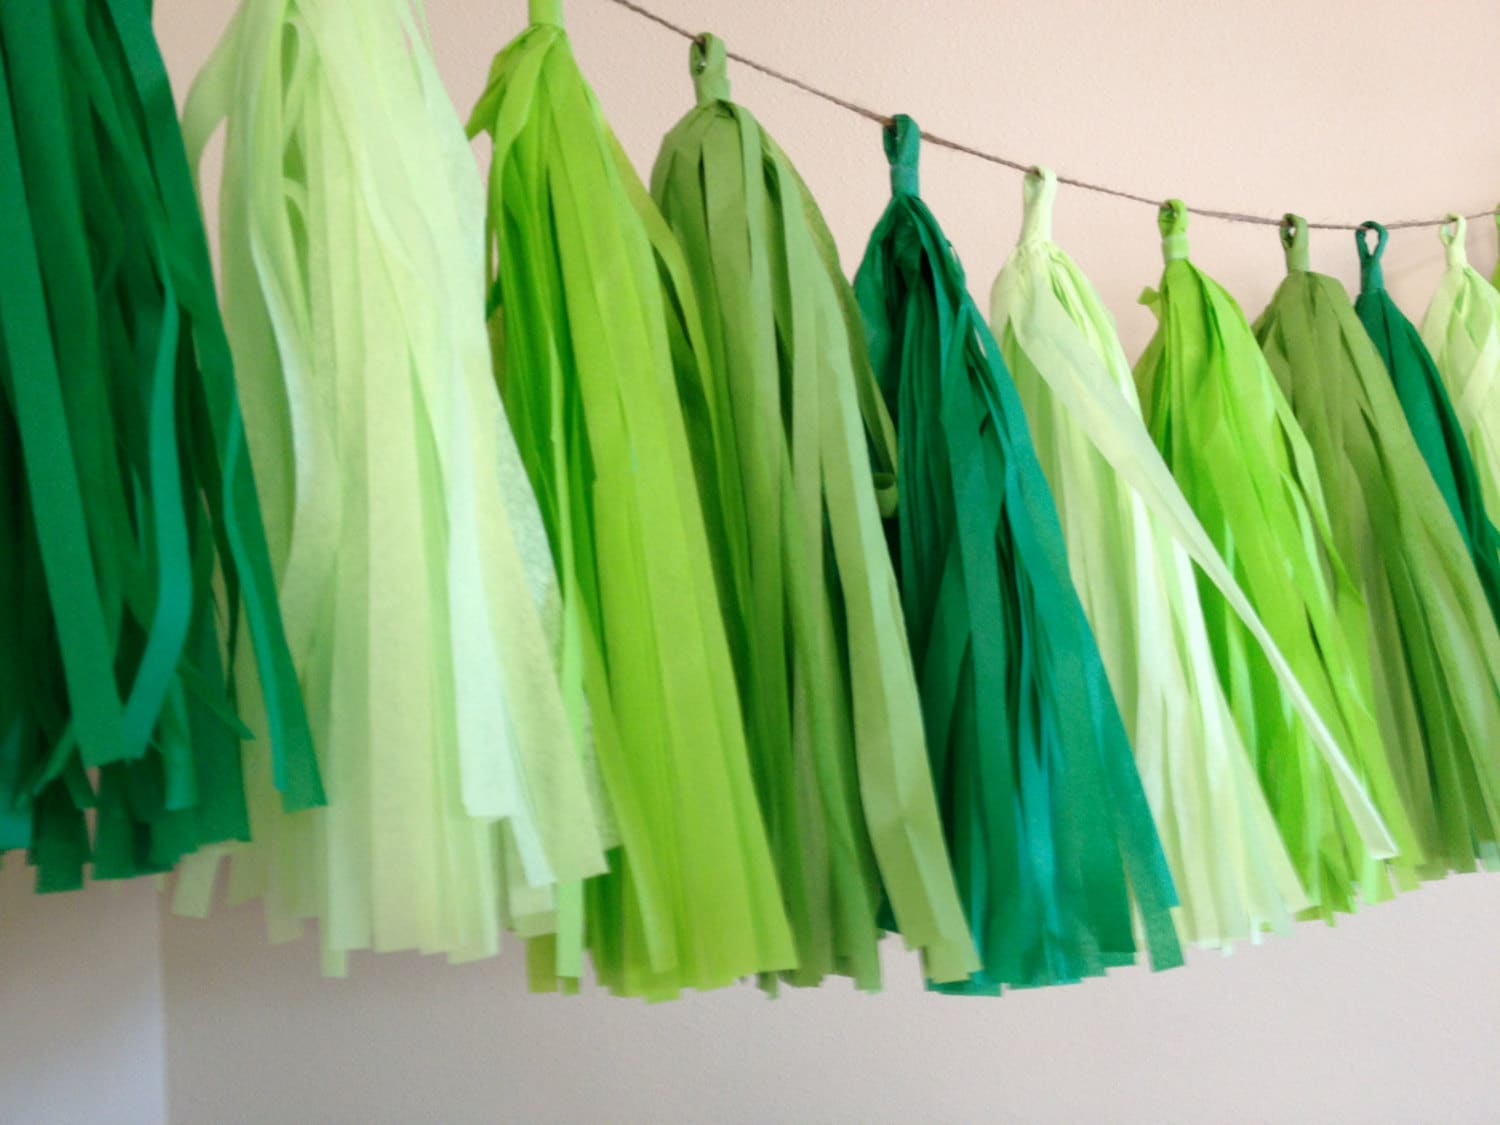 GREEN OMBRE / tissue paper tassel garland / photo backdrop / nursery decoration / wedding decorations / birthday decor / party decorations